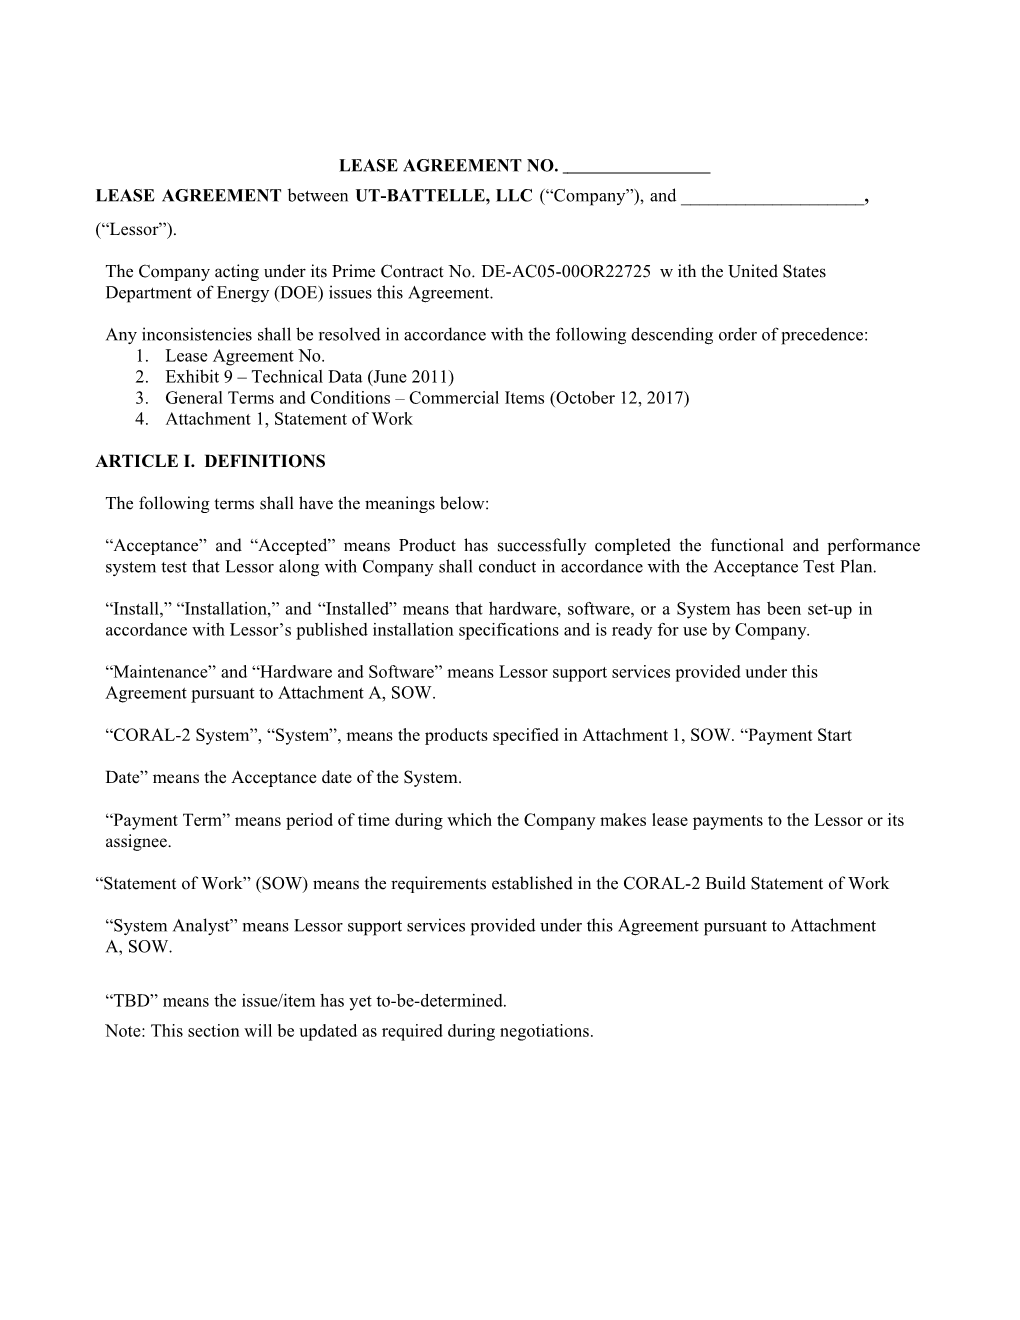 CORAL ORNL Draft Leaseagreementfinal 10-25-2013